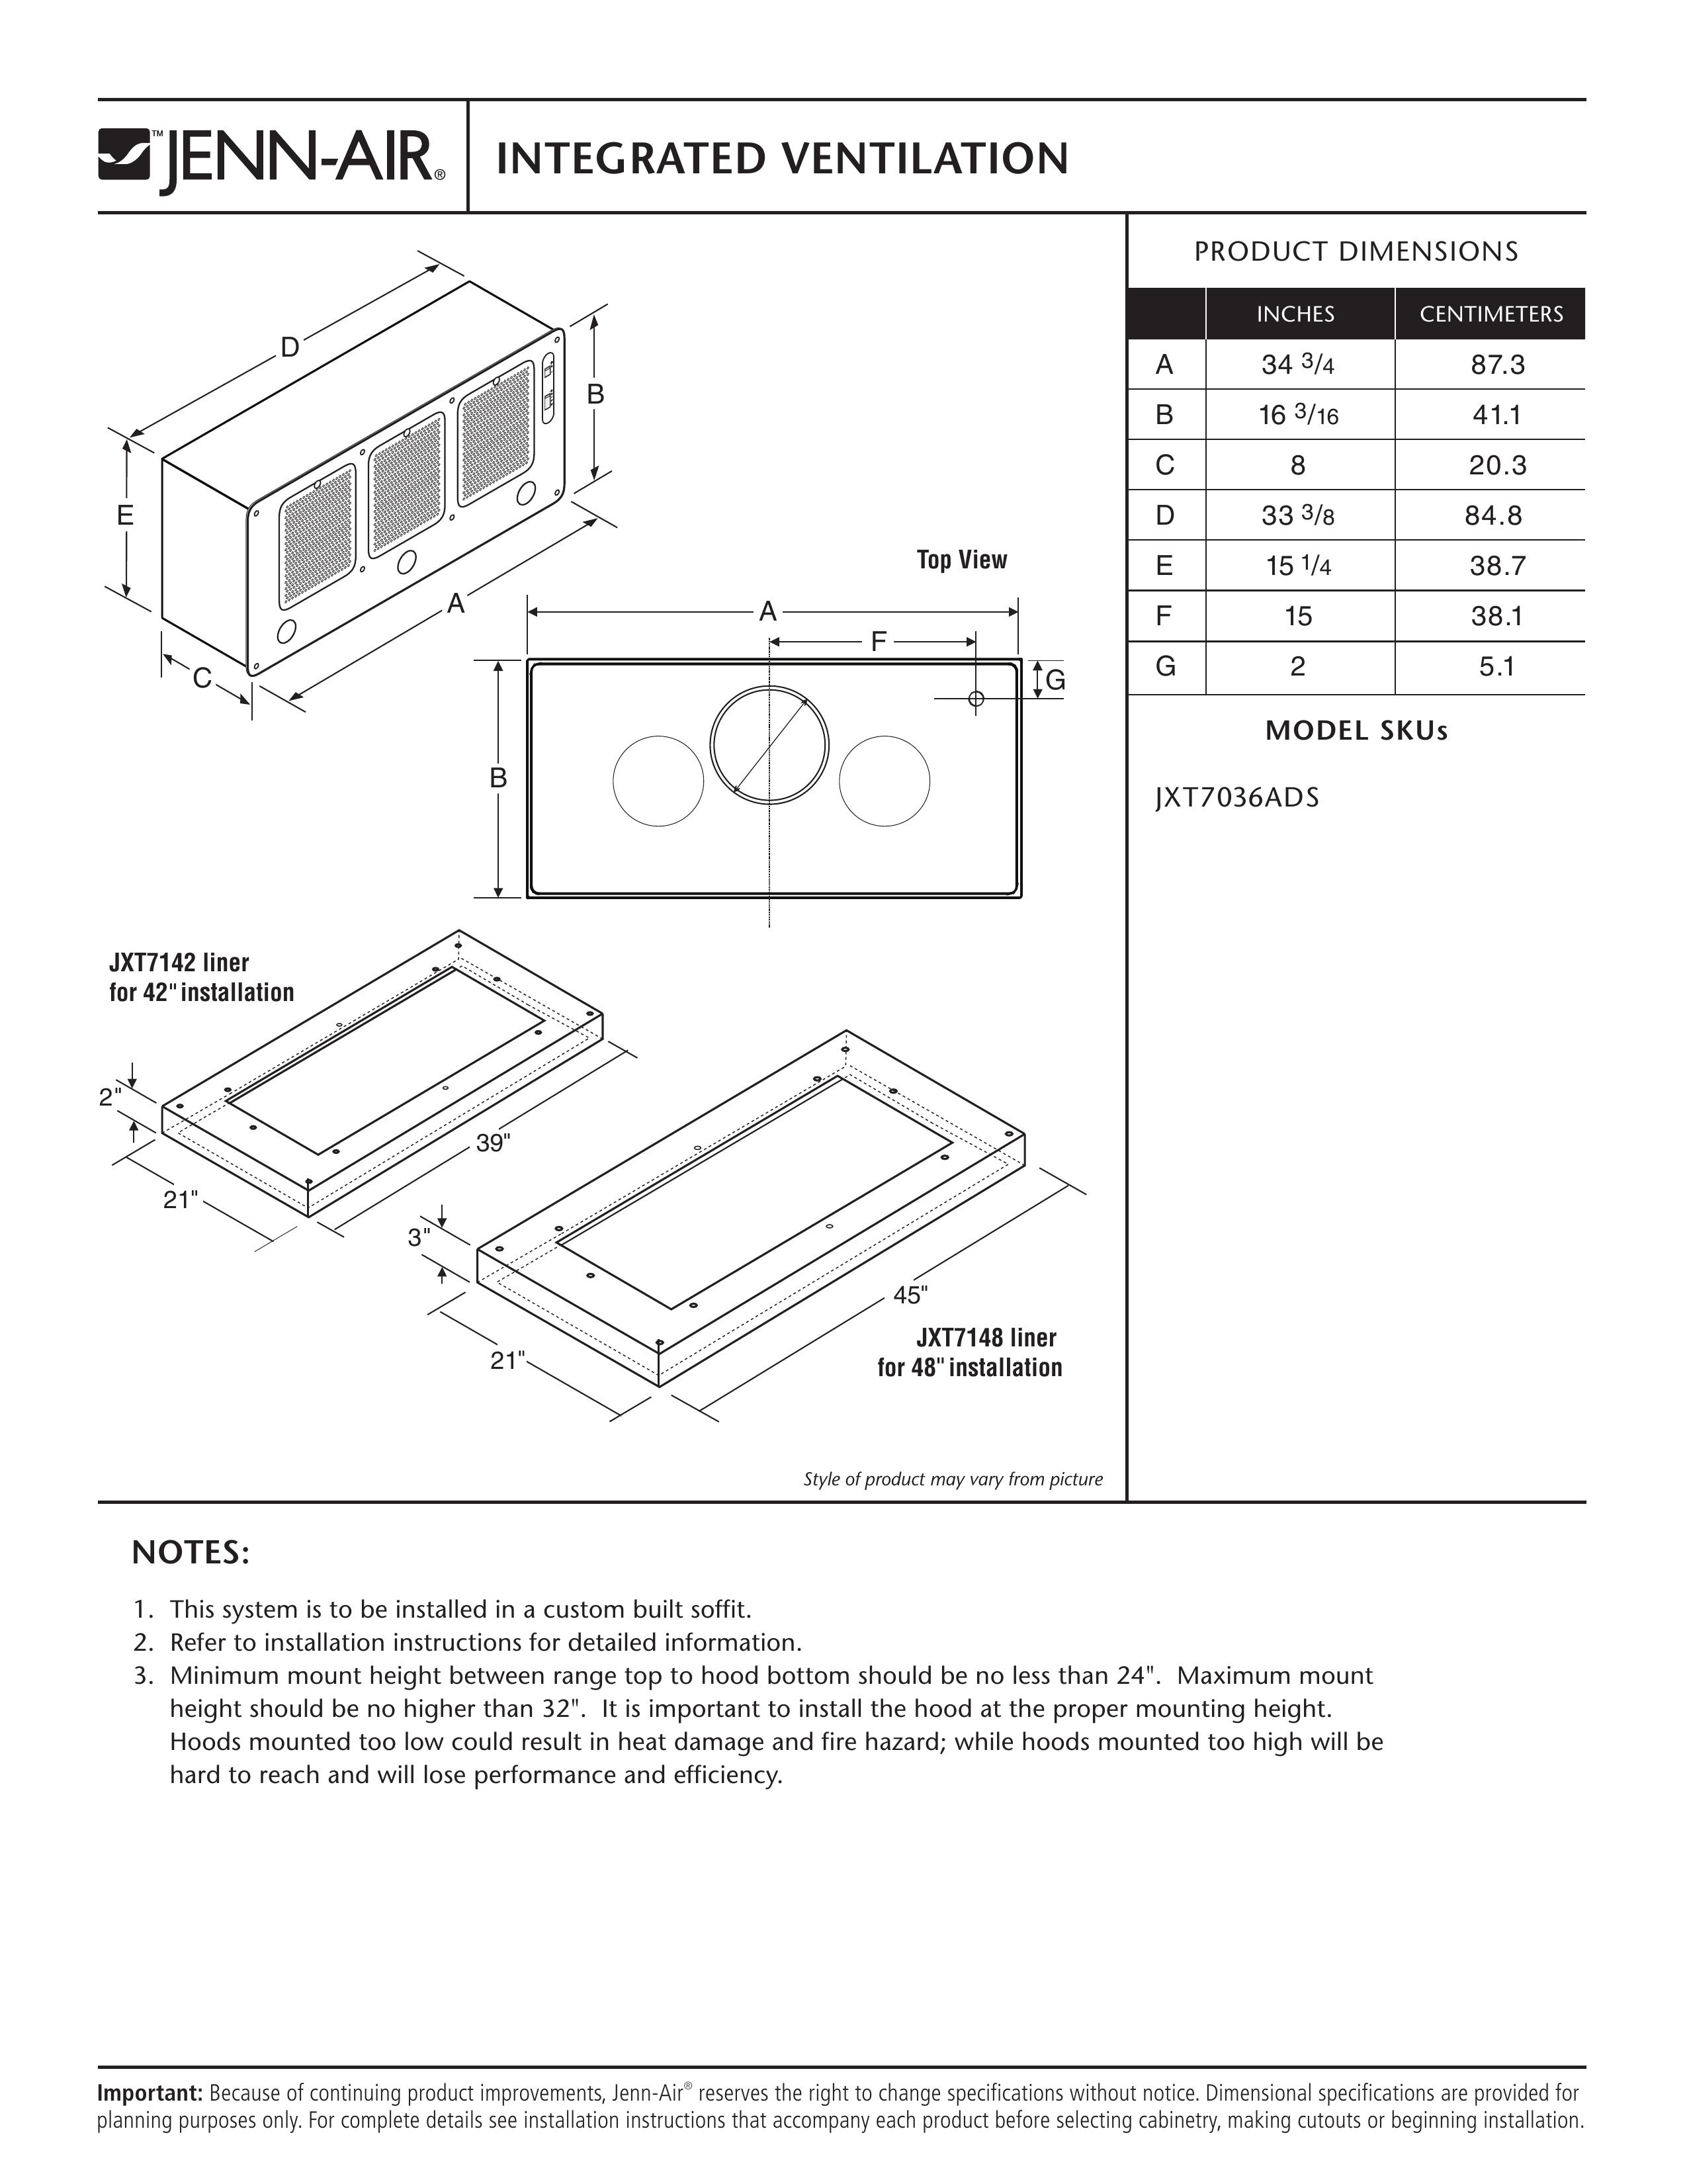 Jenn-Air JXT7148 Ventilation Hood User Manual